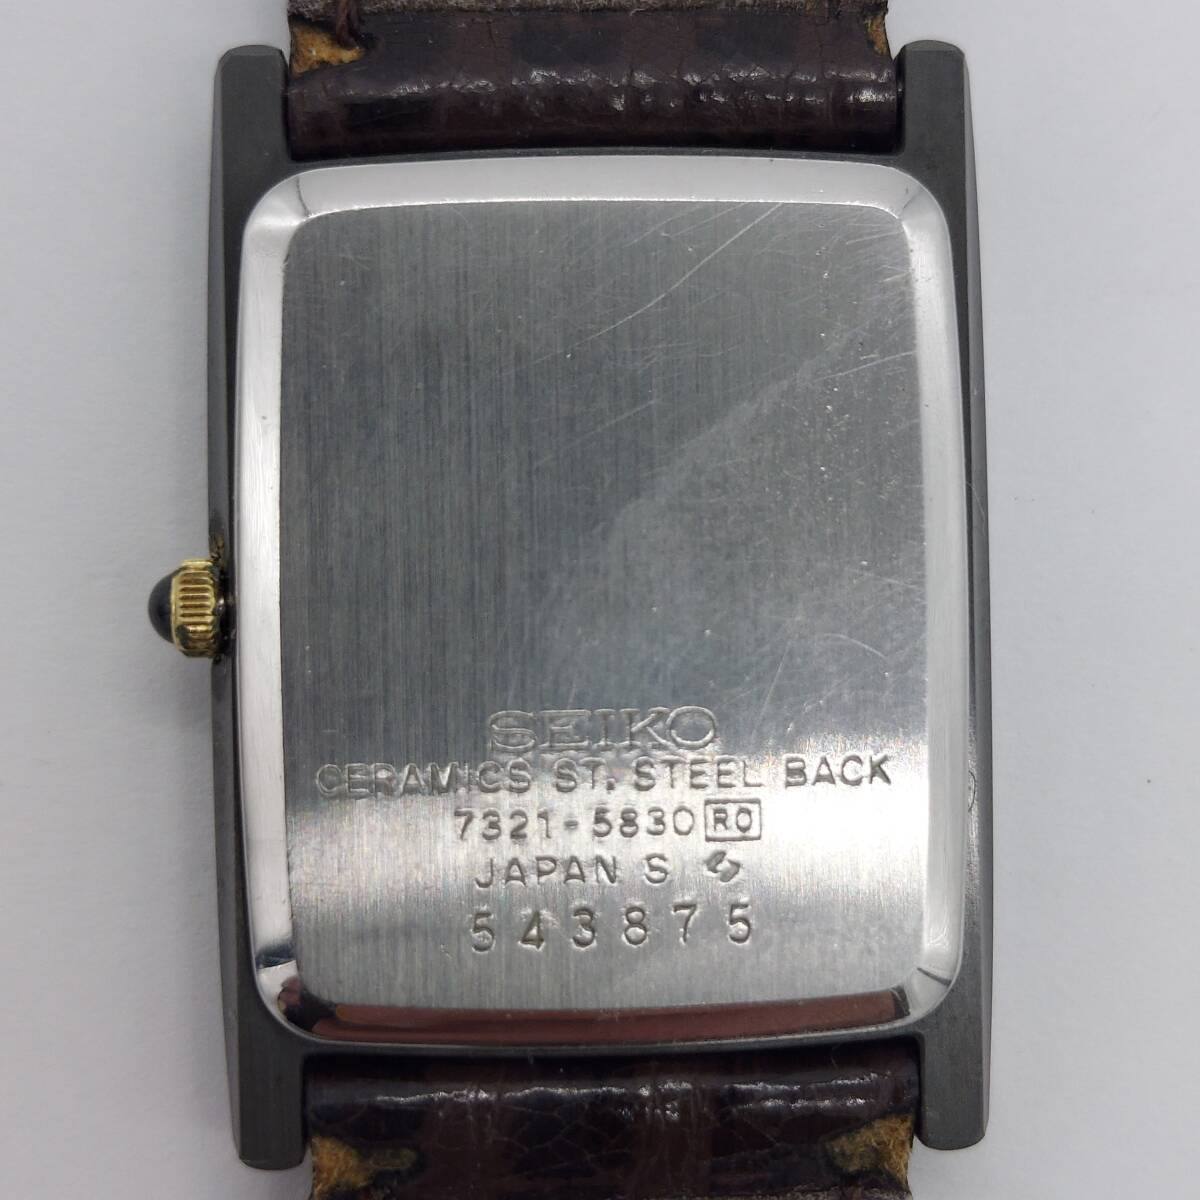 [6199] Seiko Dolce 7321-5830 quarts wristwatch operation not yet verification 